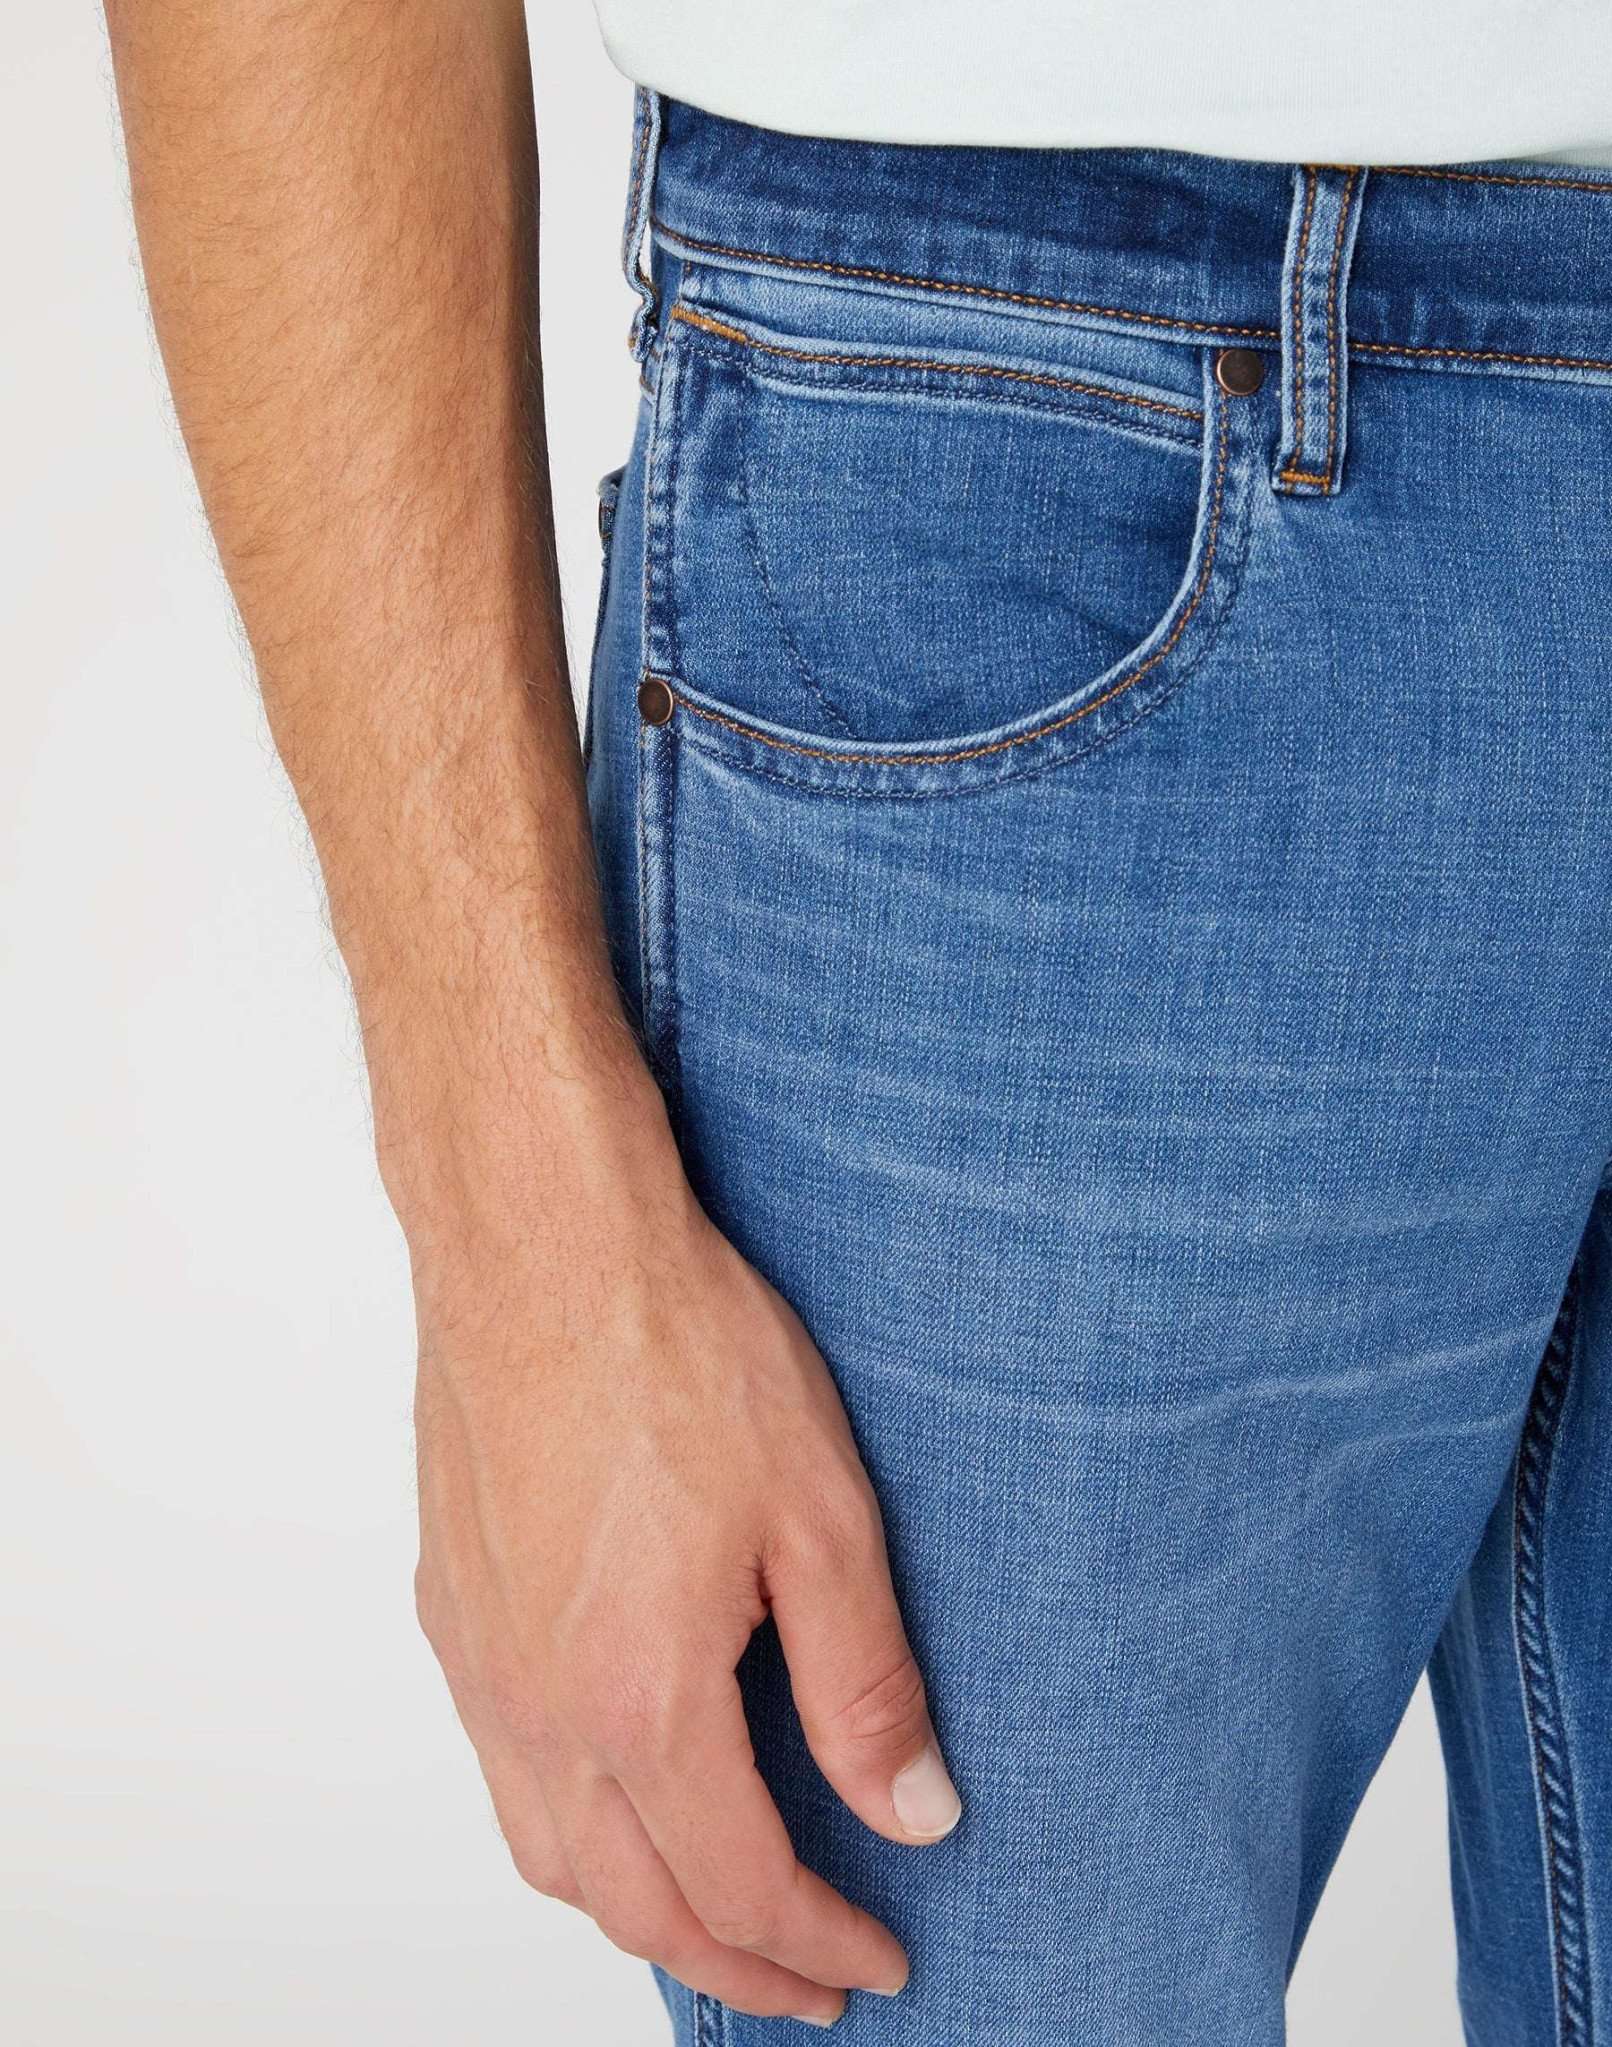 Greensboro Medium Stretch in Softwear Jeans Wrangler   